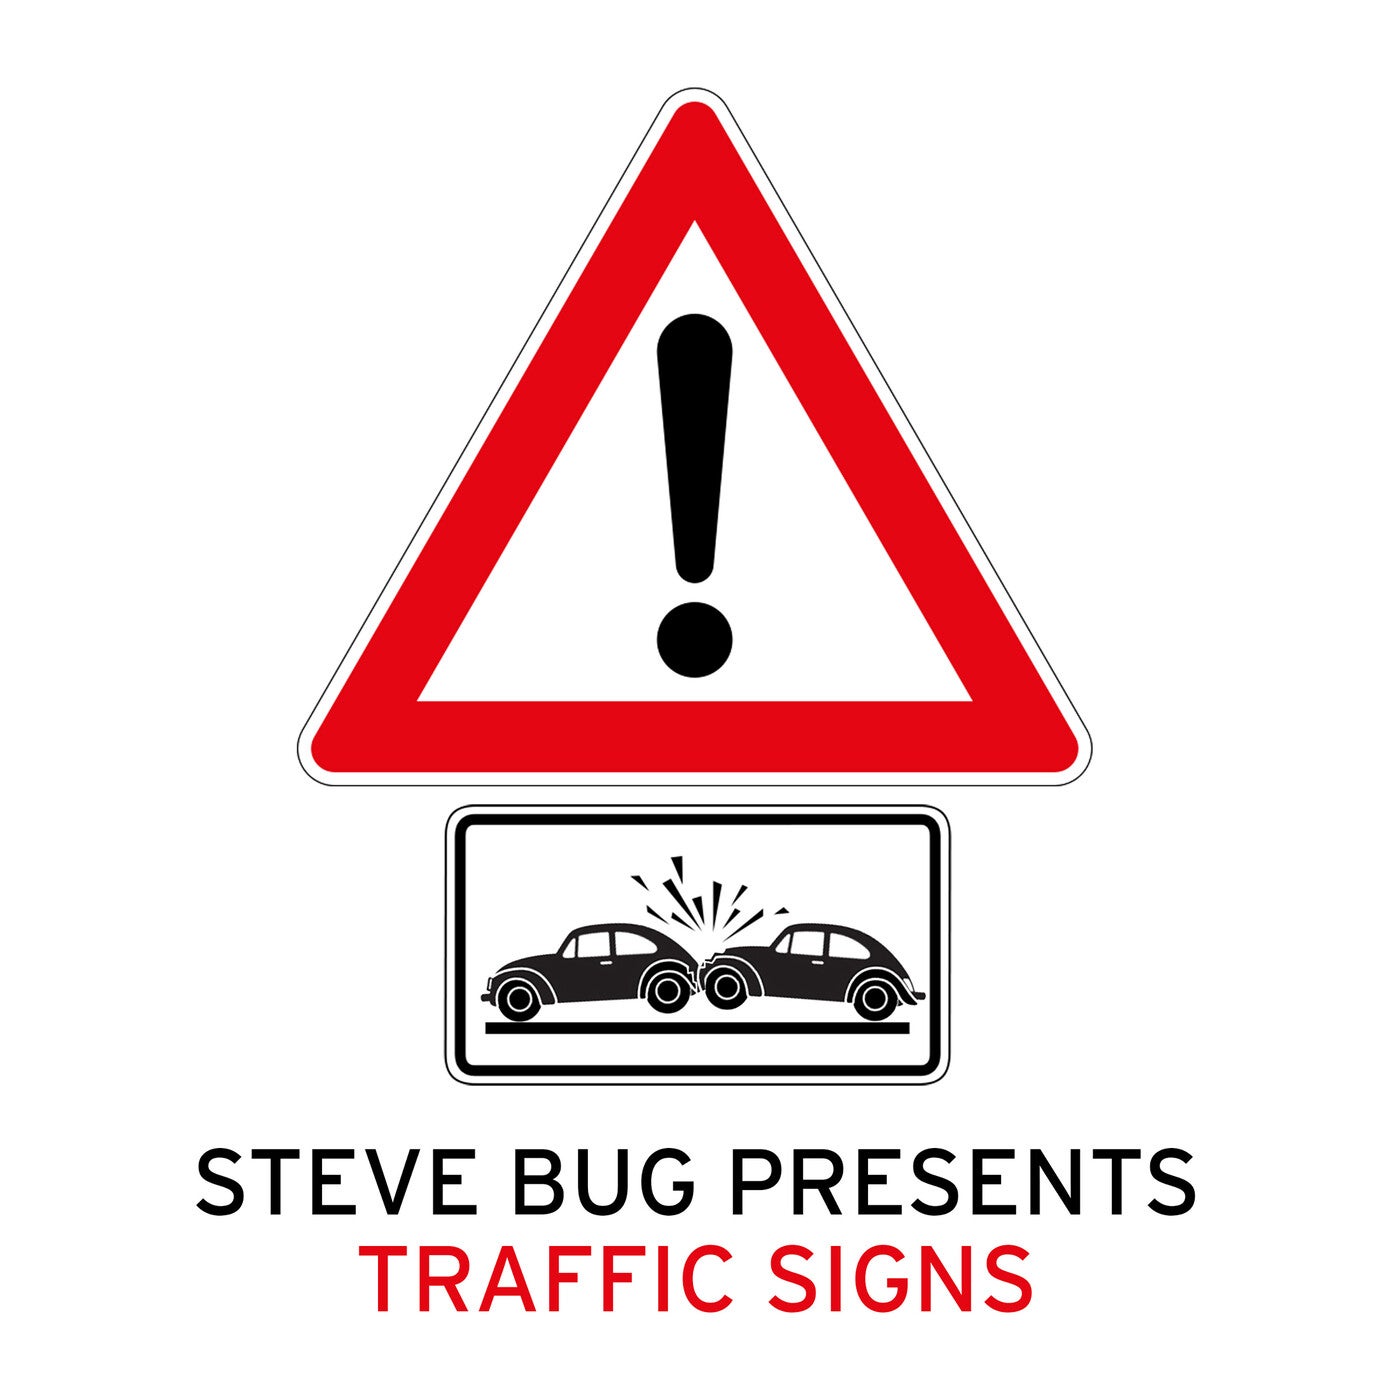 Steve Bug presents Traffic Signs